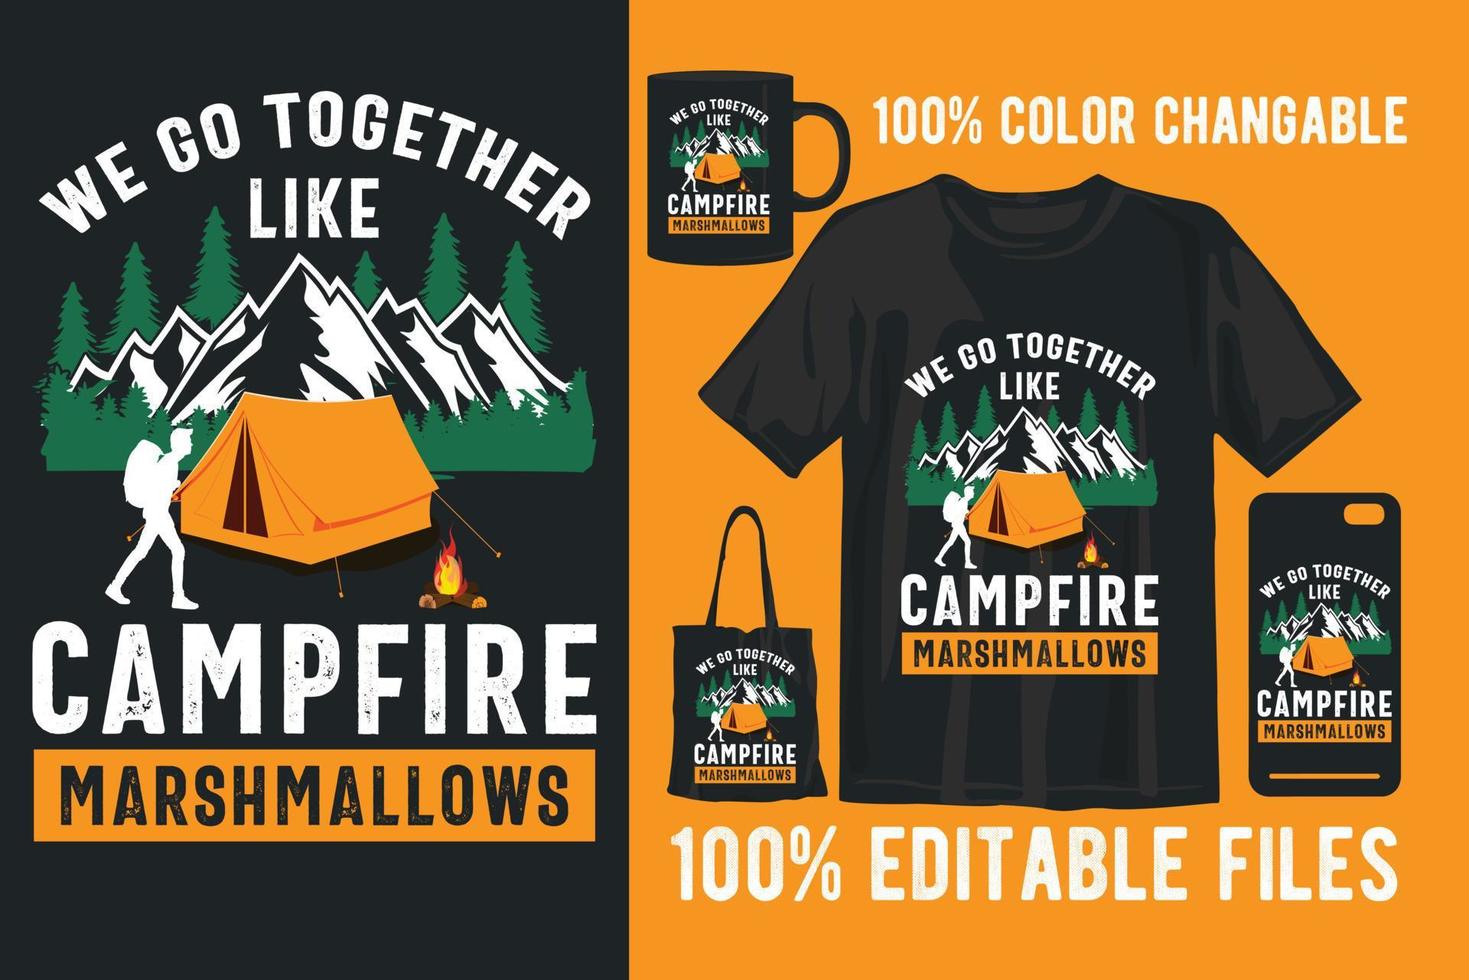 Camping retro vintage t shirt design vector